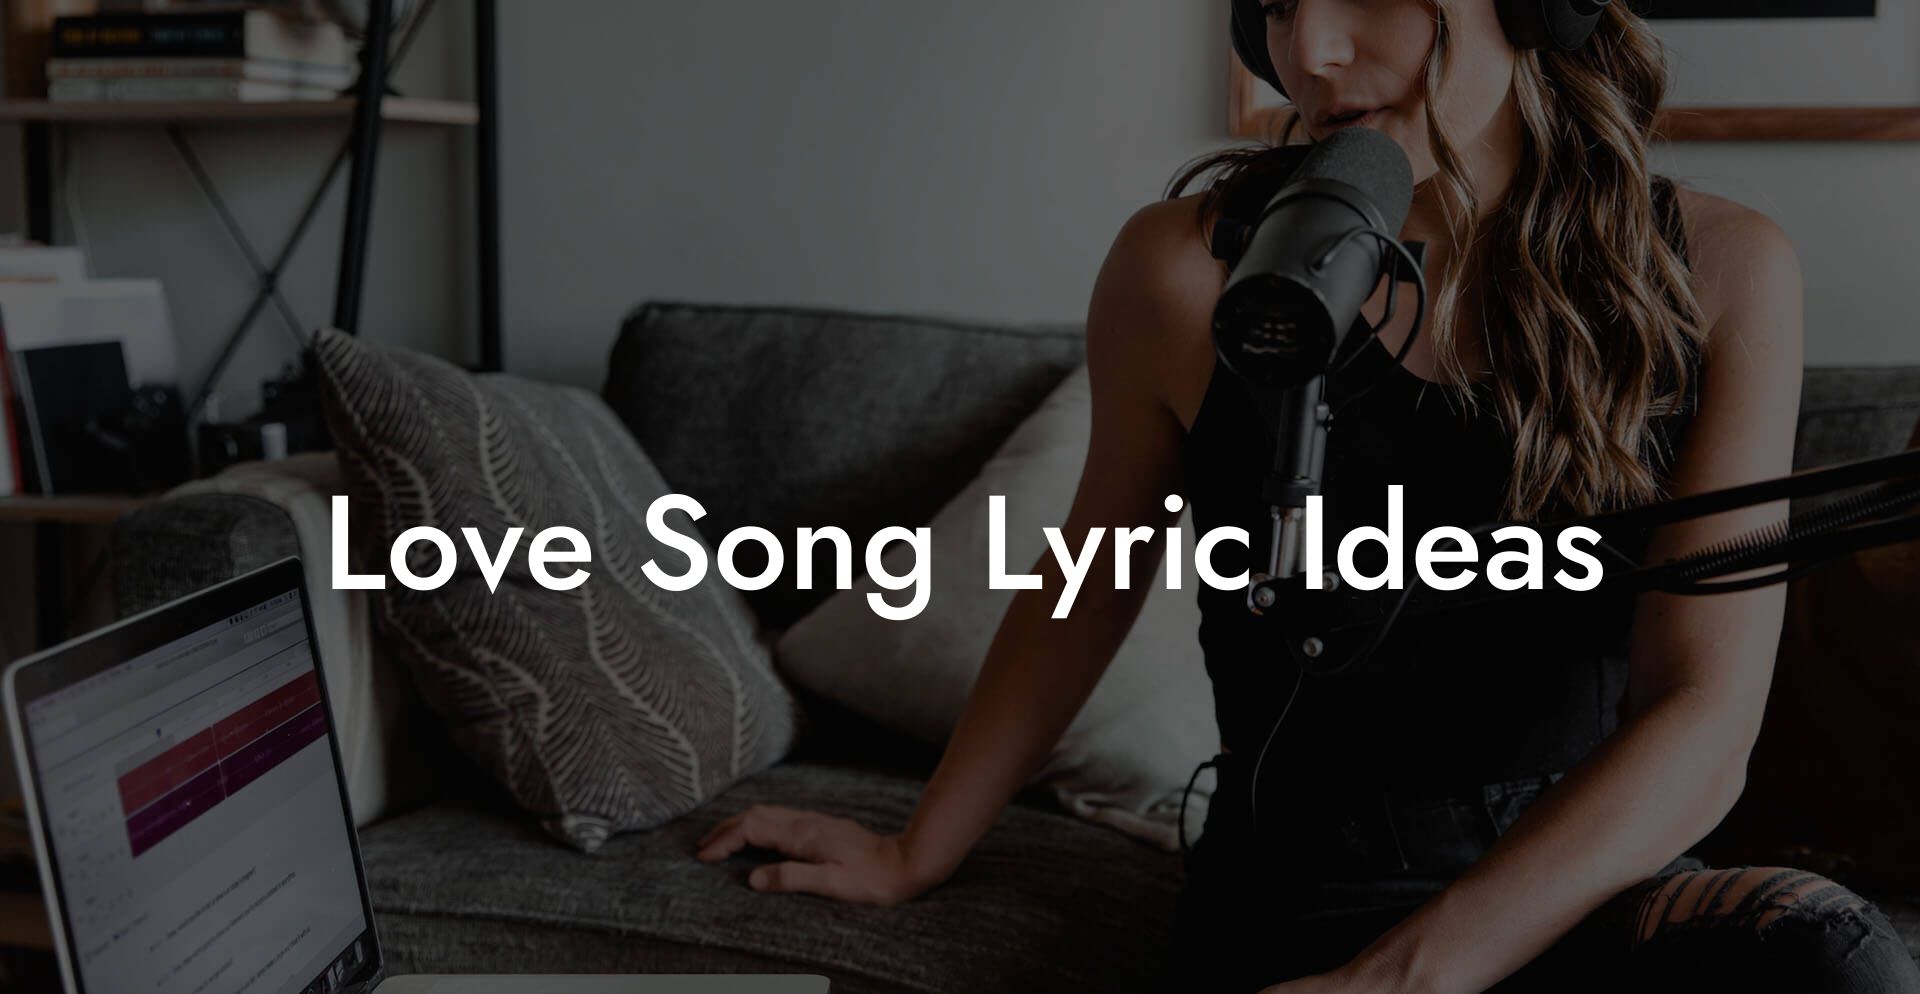 love song lyric ideas lyric assistant